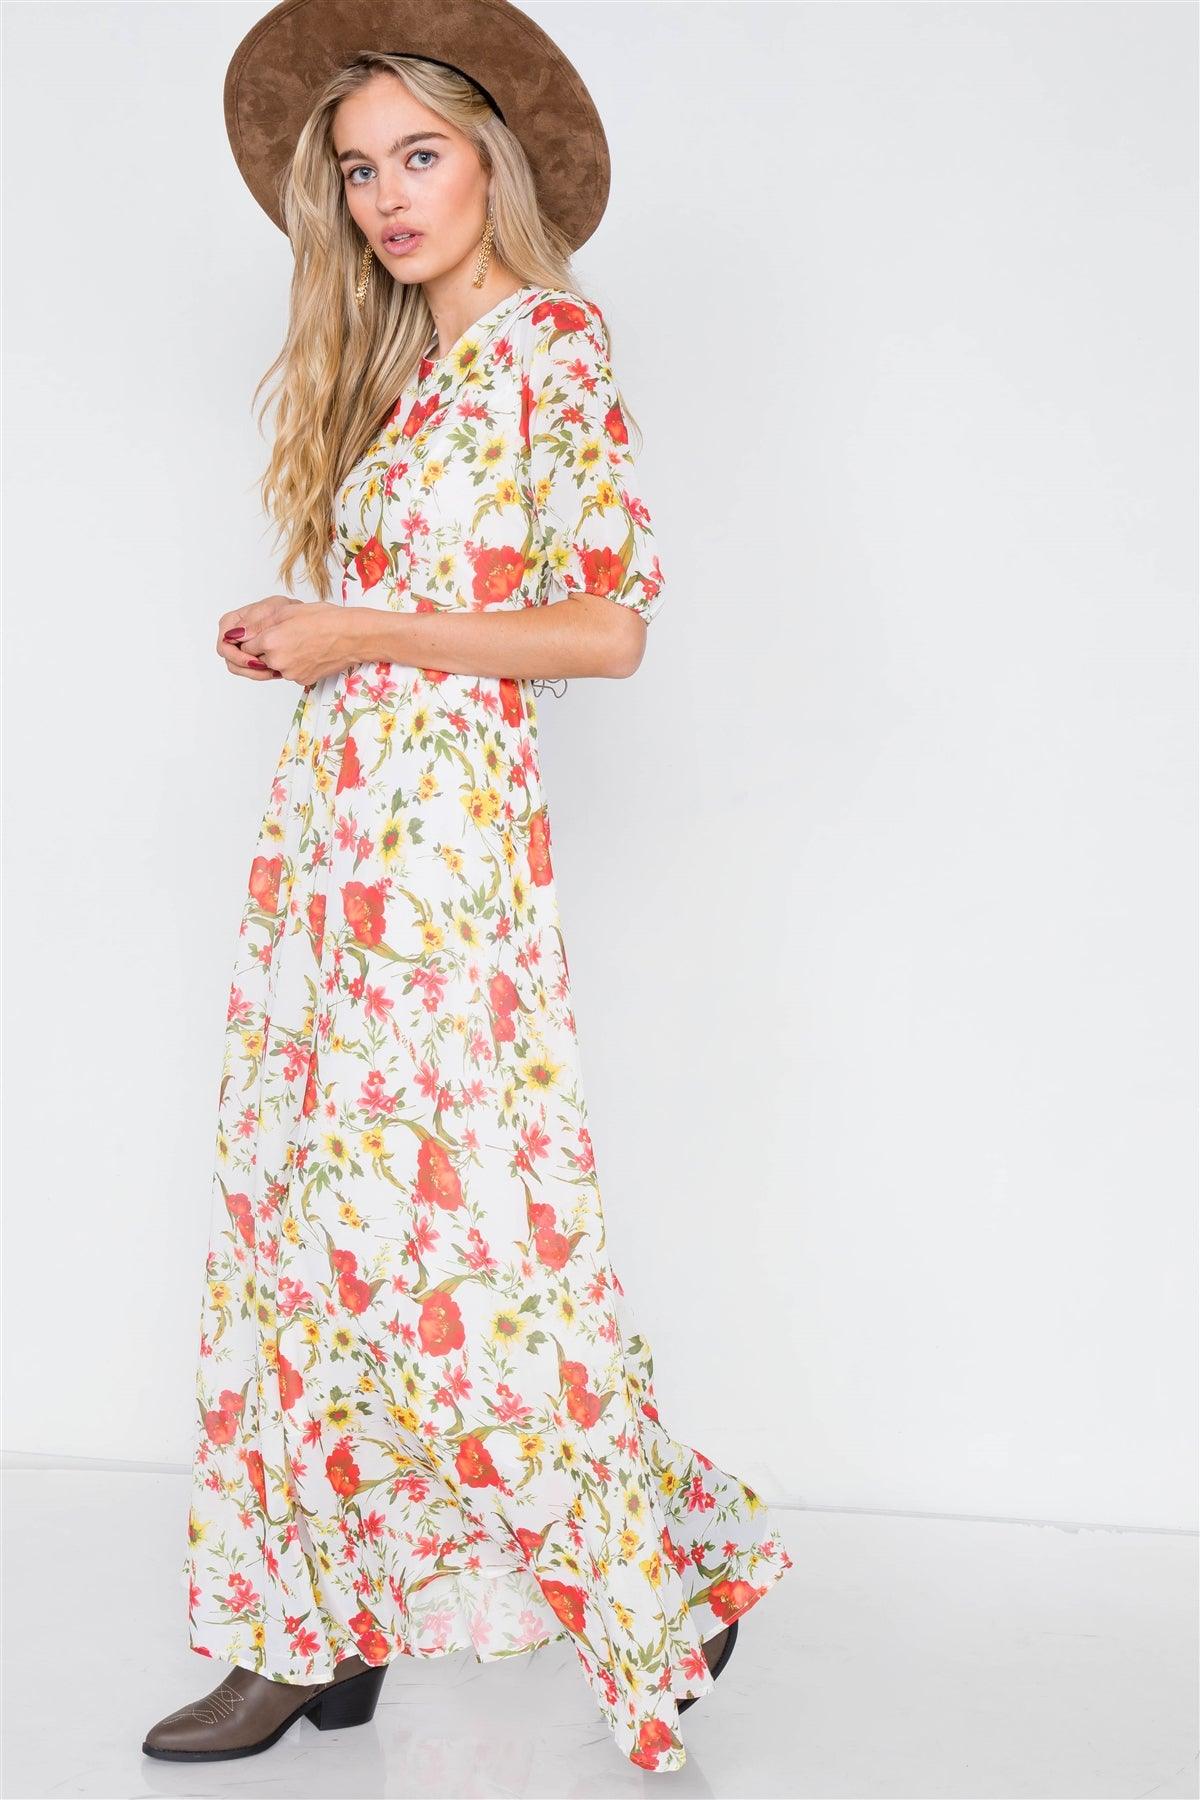 Beige Chic Semi-Sheer Floral Print Maxi Dress /1-2-2